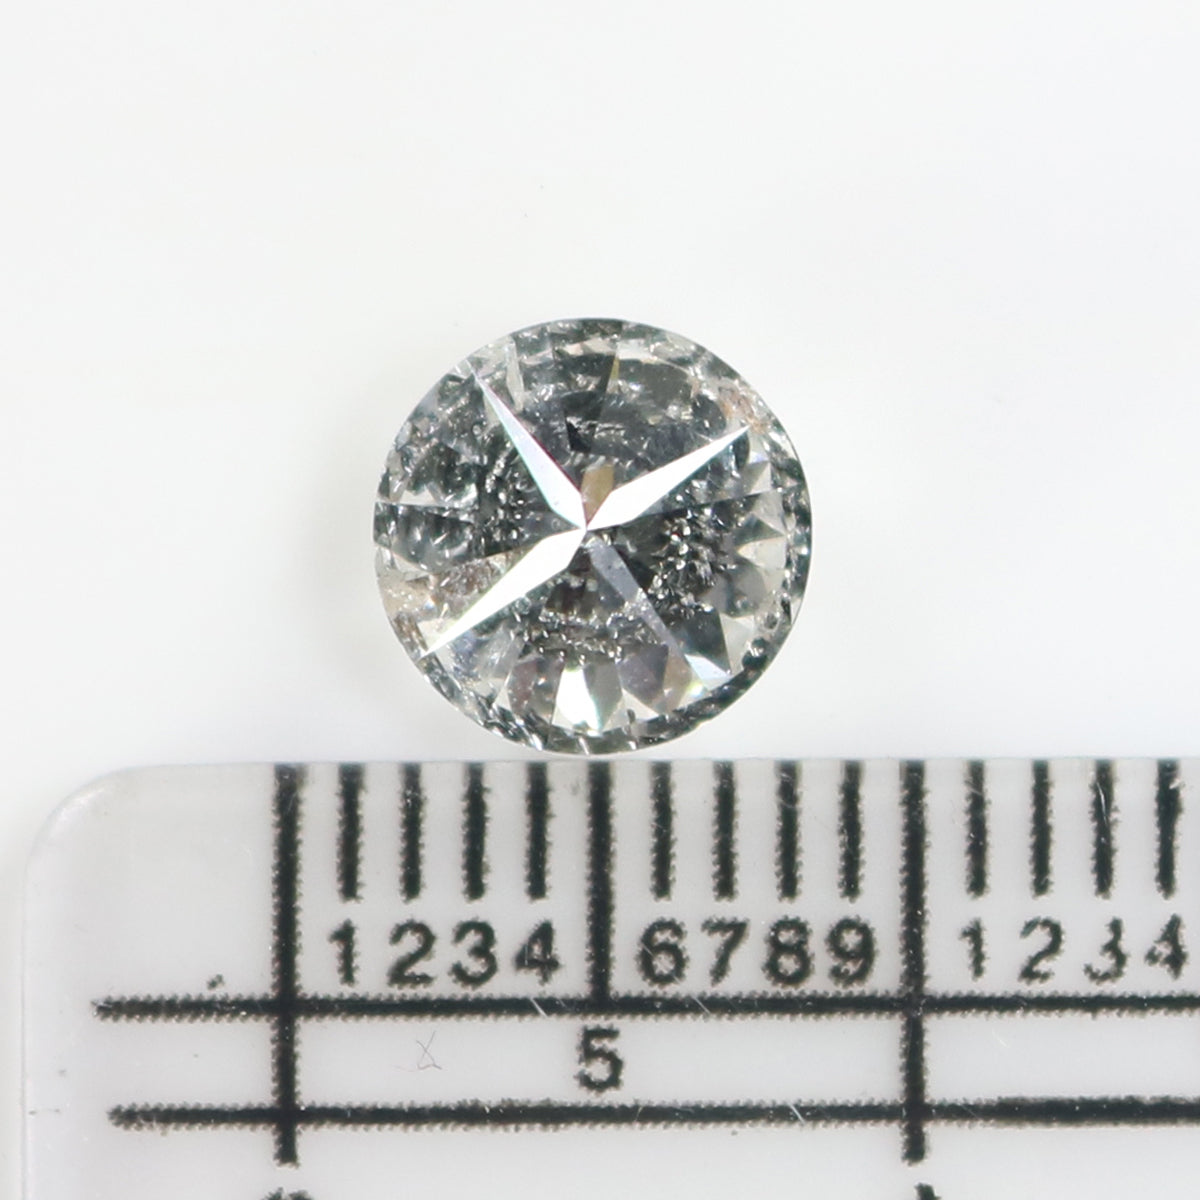 1.55 Ct Natural Loose Round Shape Diamond White - F Color Round Cut Diamond 7.05 MM Natural Loose Diamond Round Brilliant Cut Diamond QL2650